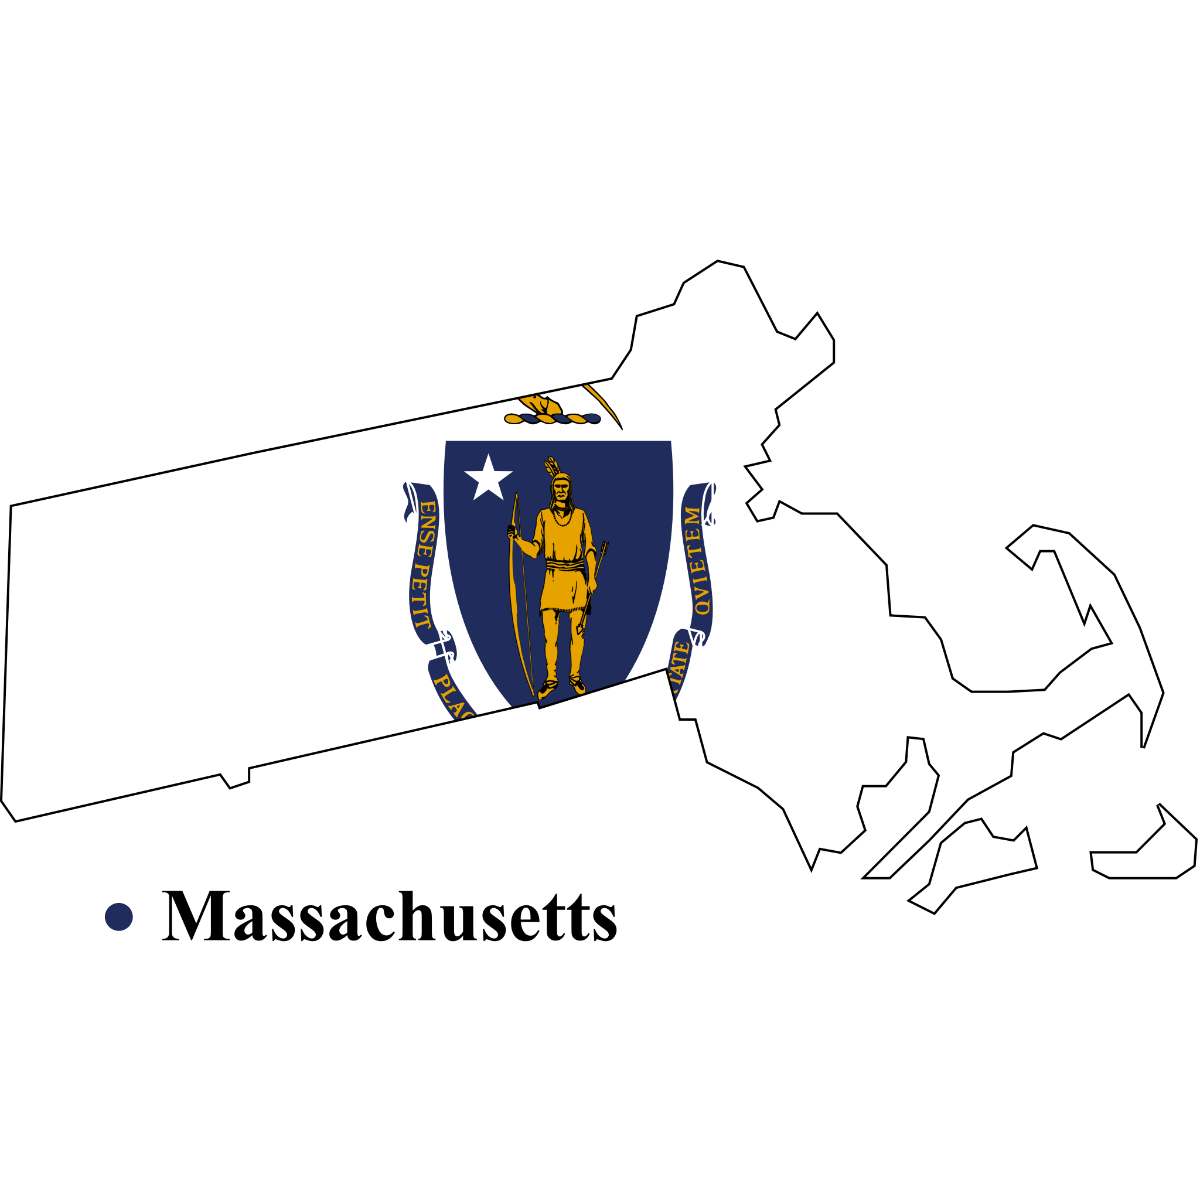 Massachusetts State map cutout with Massachusetts flag superimposed